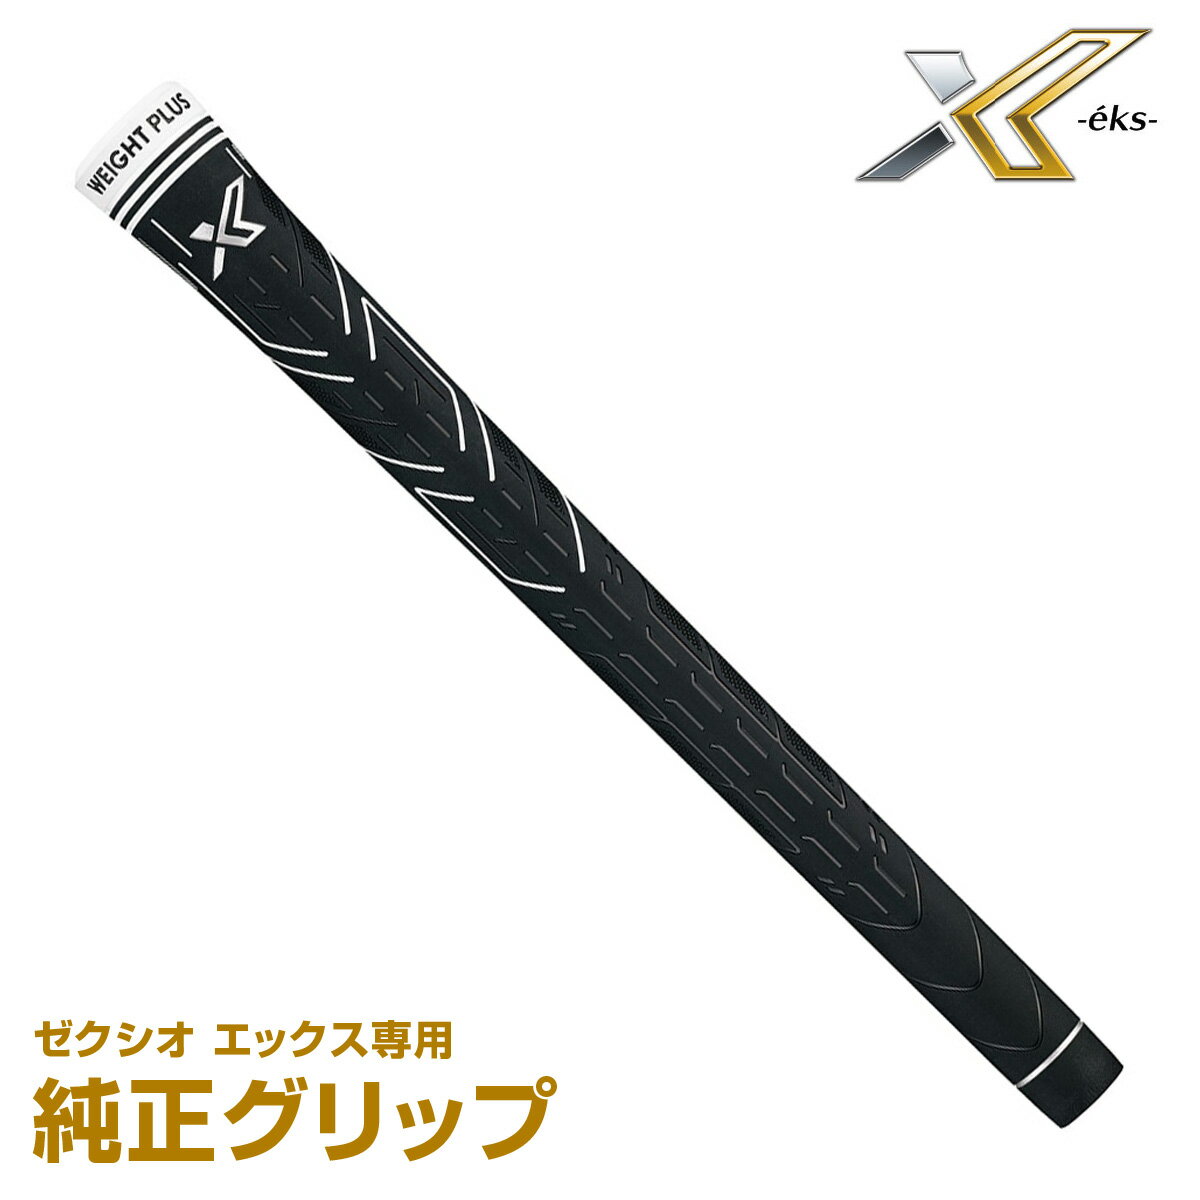 DUNLOP ダンロップ 日本正規品 XXIO X-ek